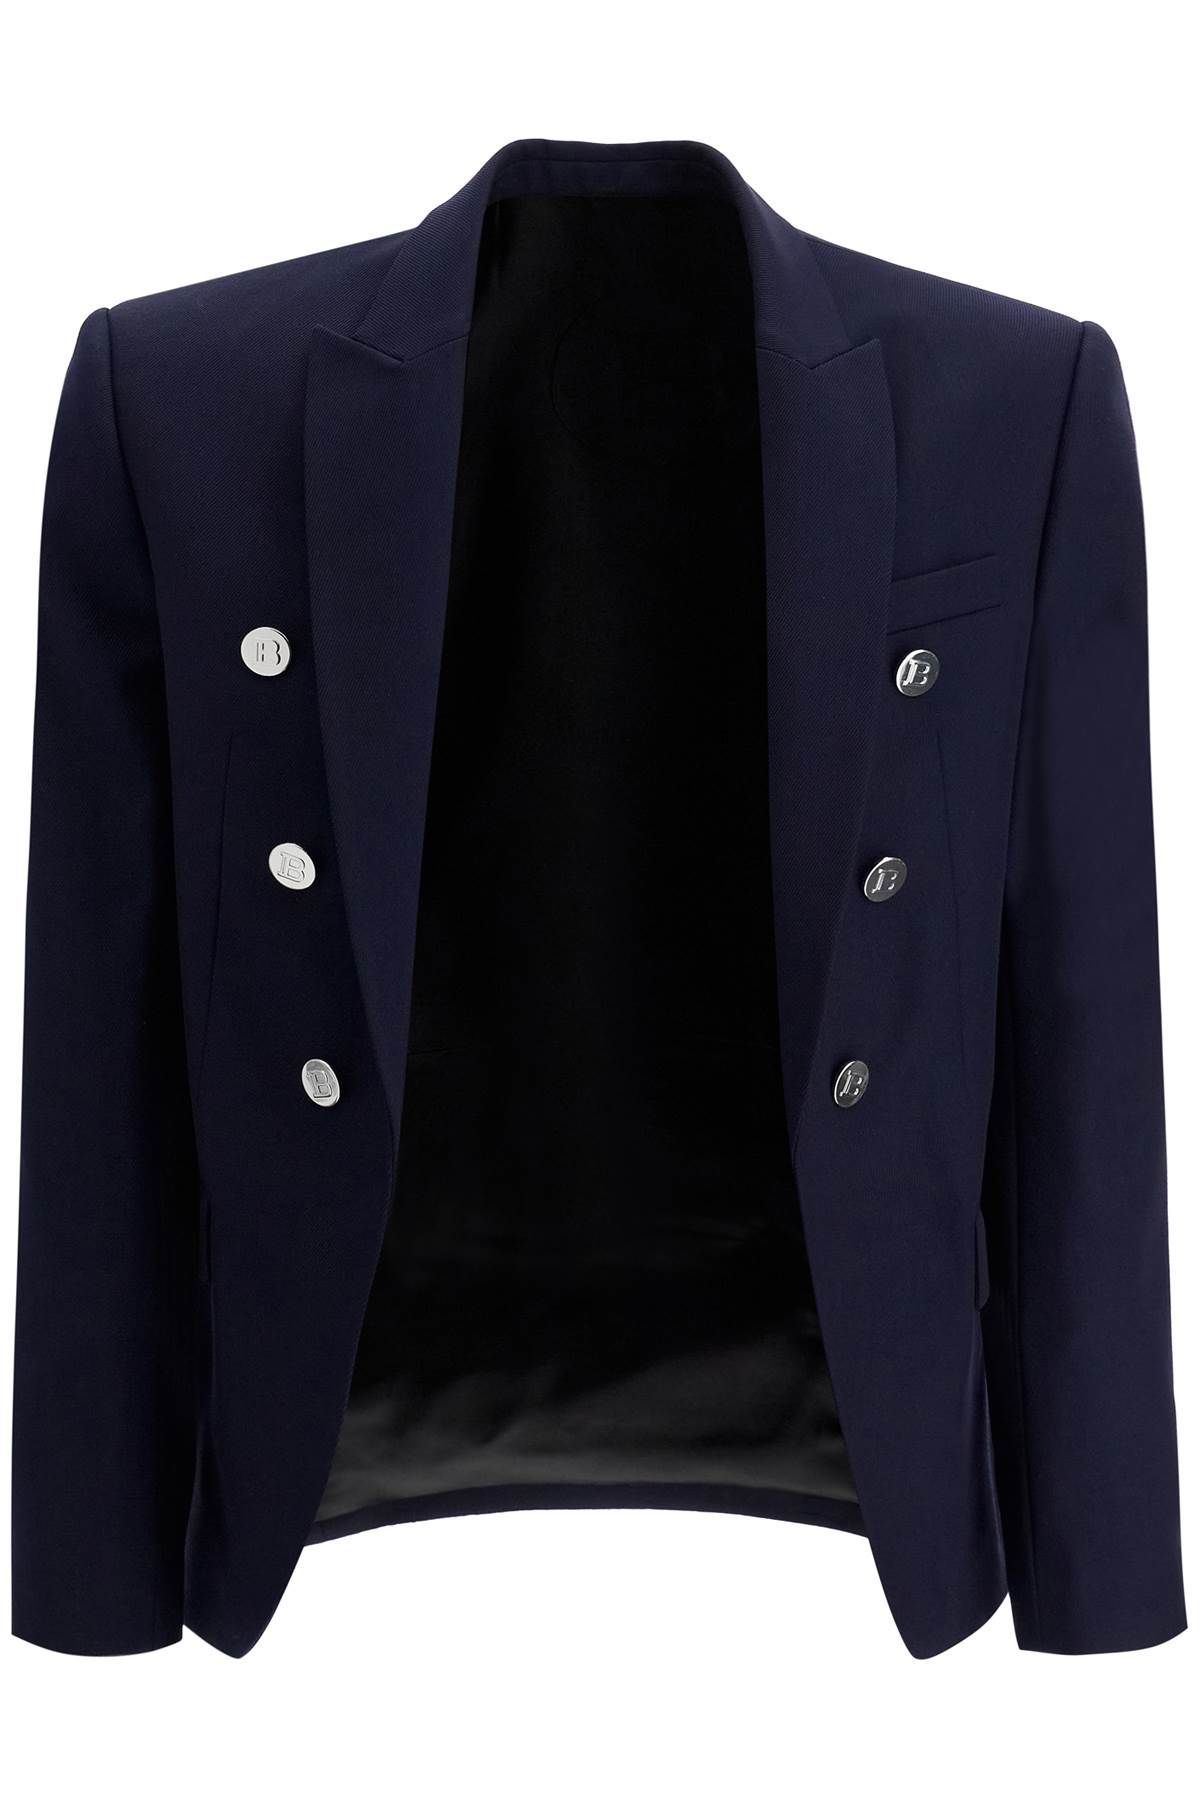 Balmain BALMAIN six-button wool jacket